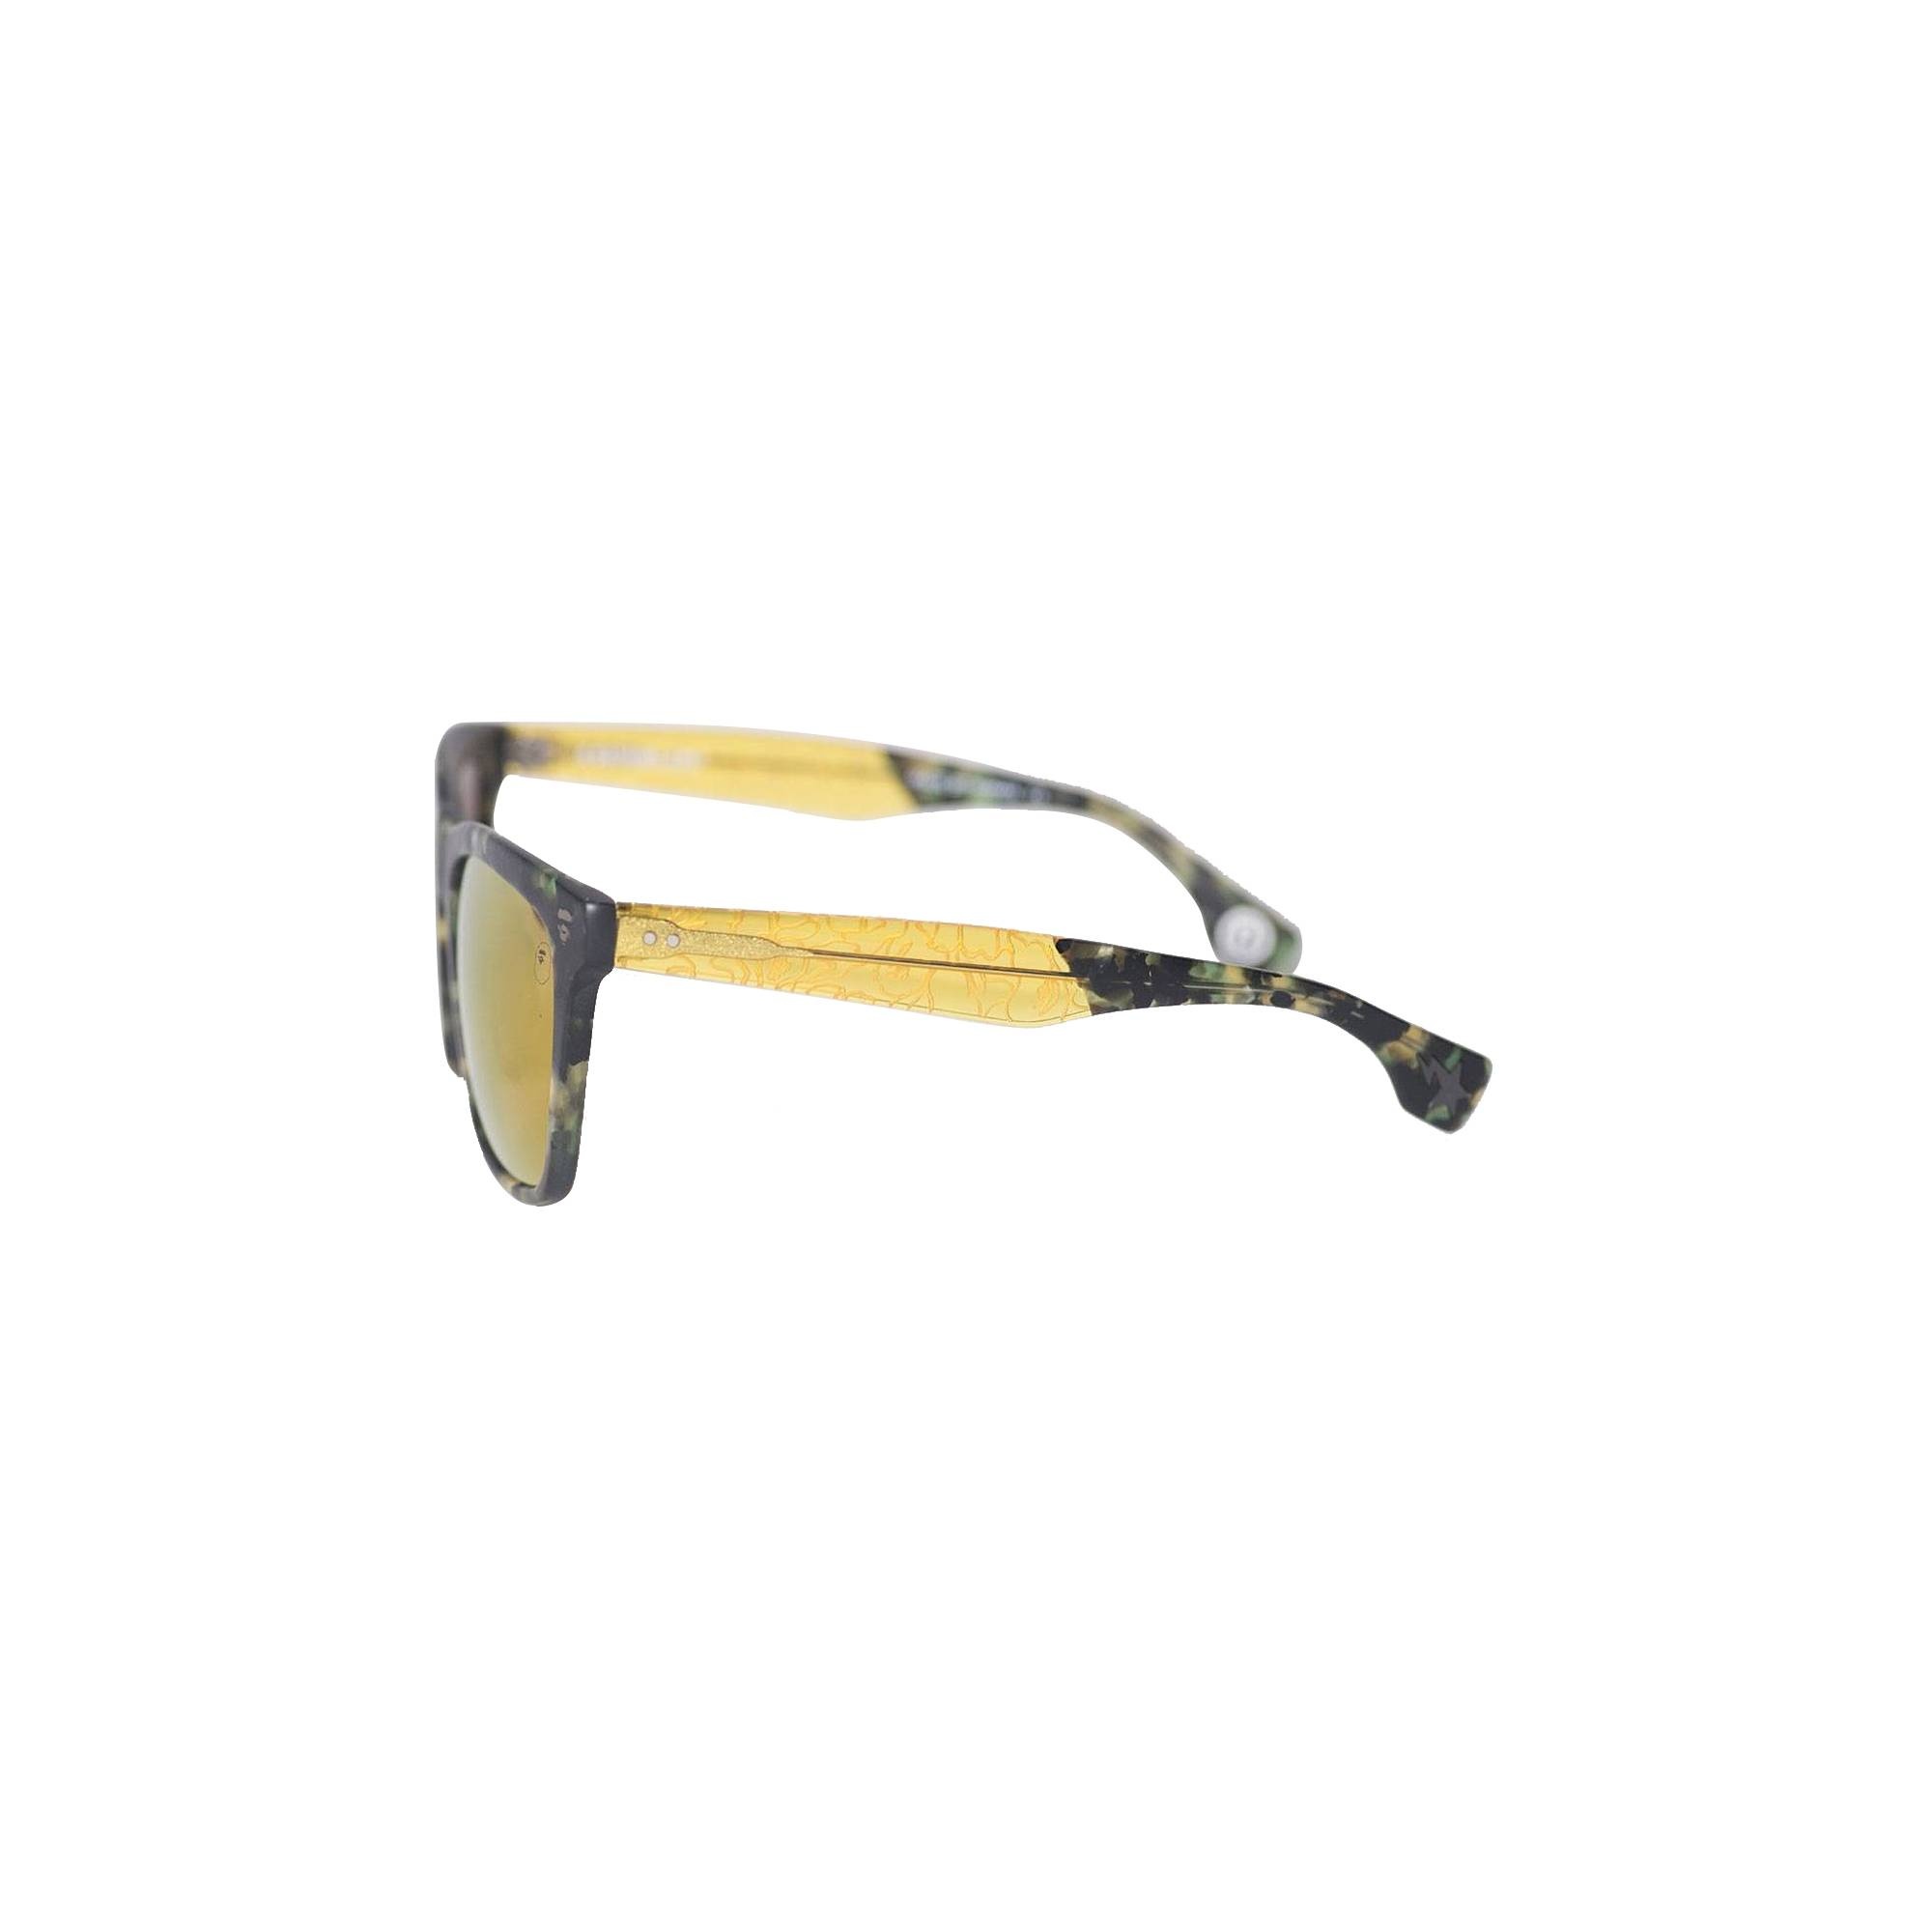 BAPE Sunglasses 'Camo' - 2